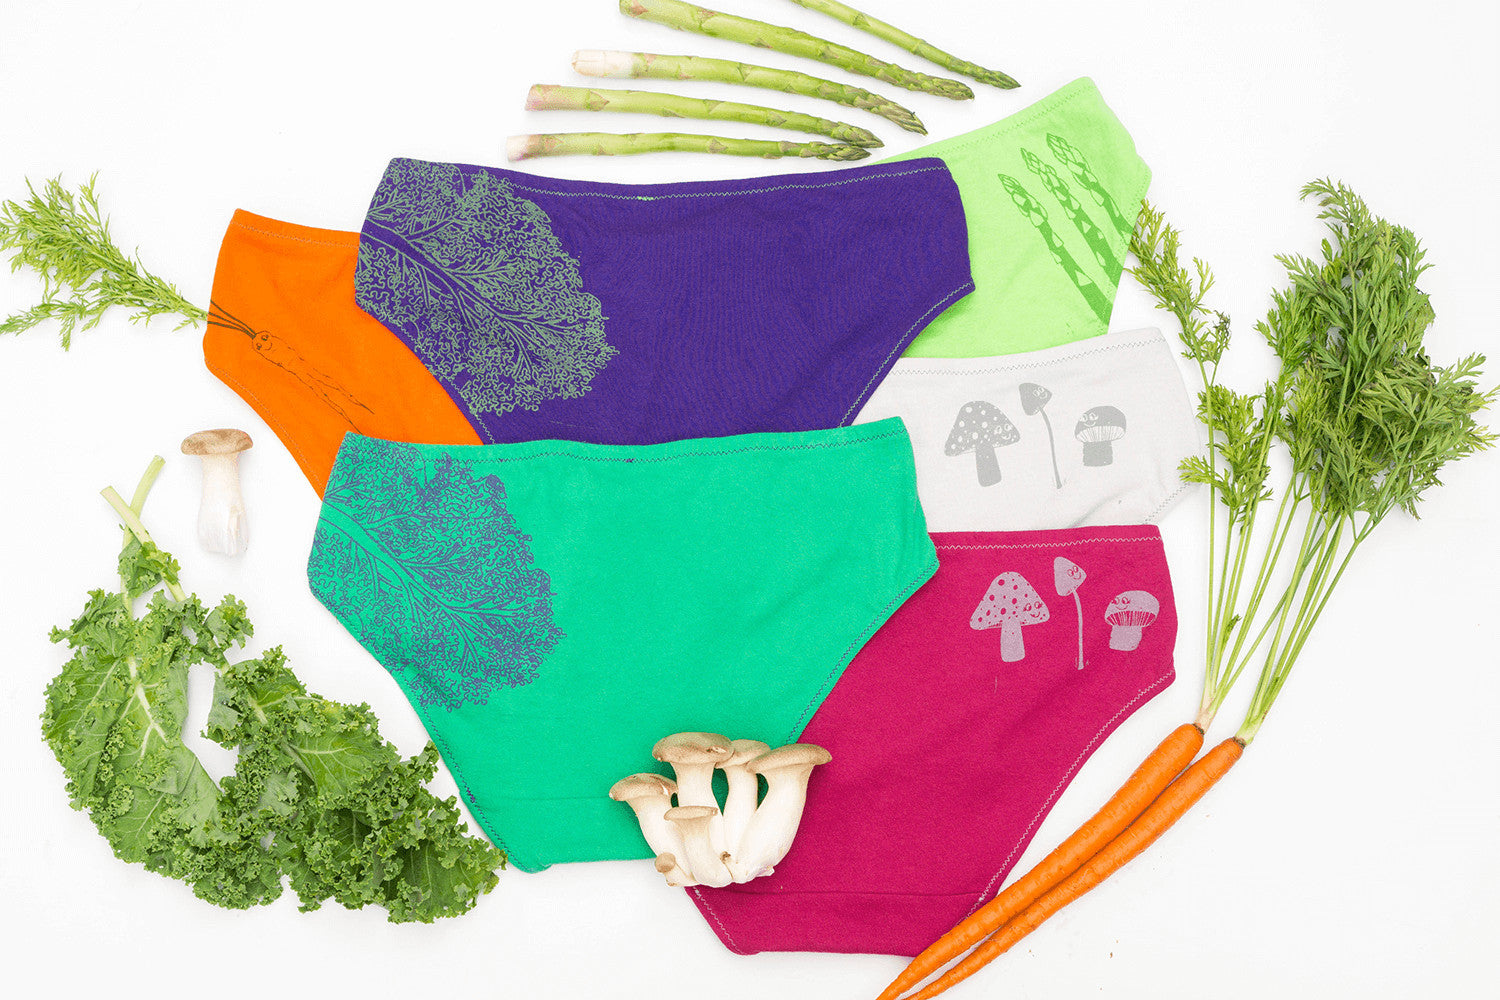 Kale, carrot, mushroom and asparagus underwear! New for fall from La Vie en Orange